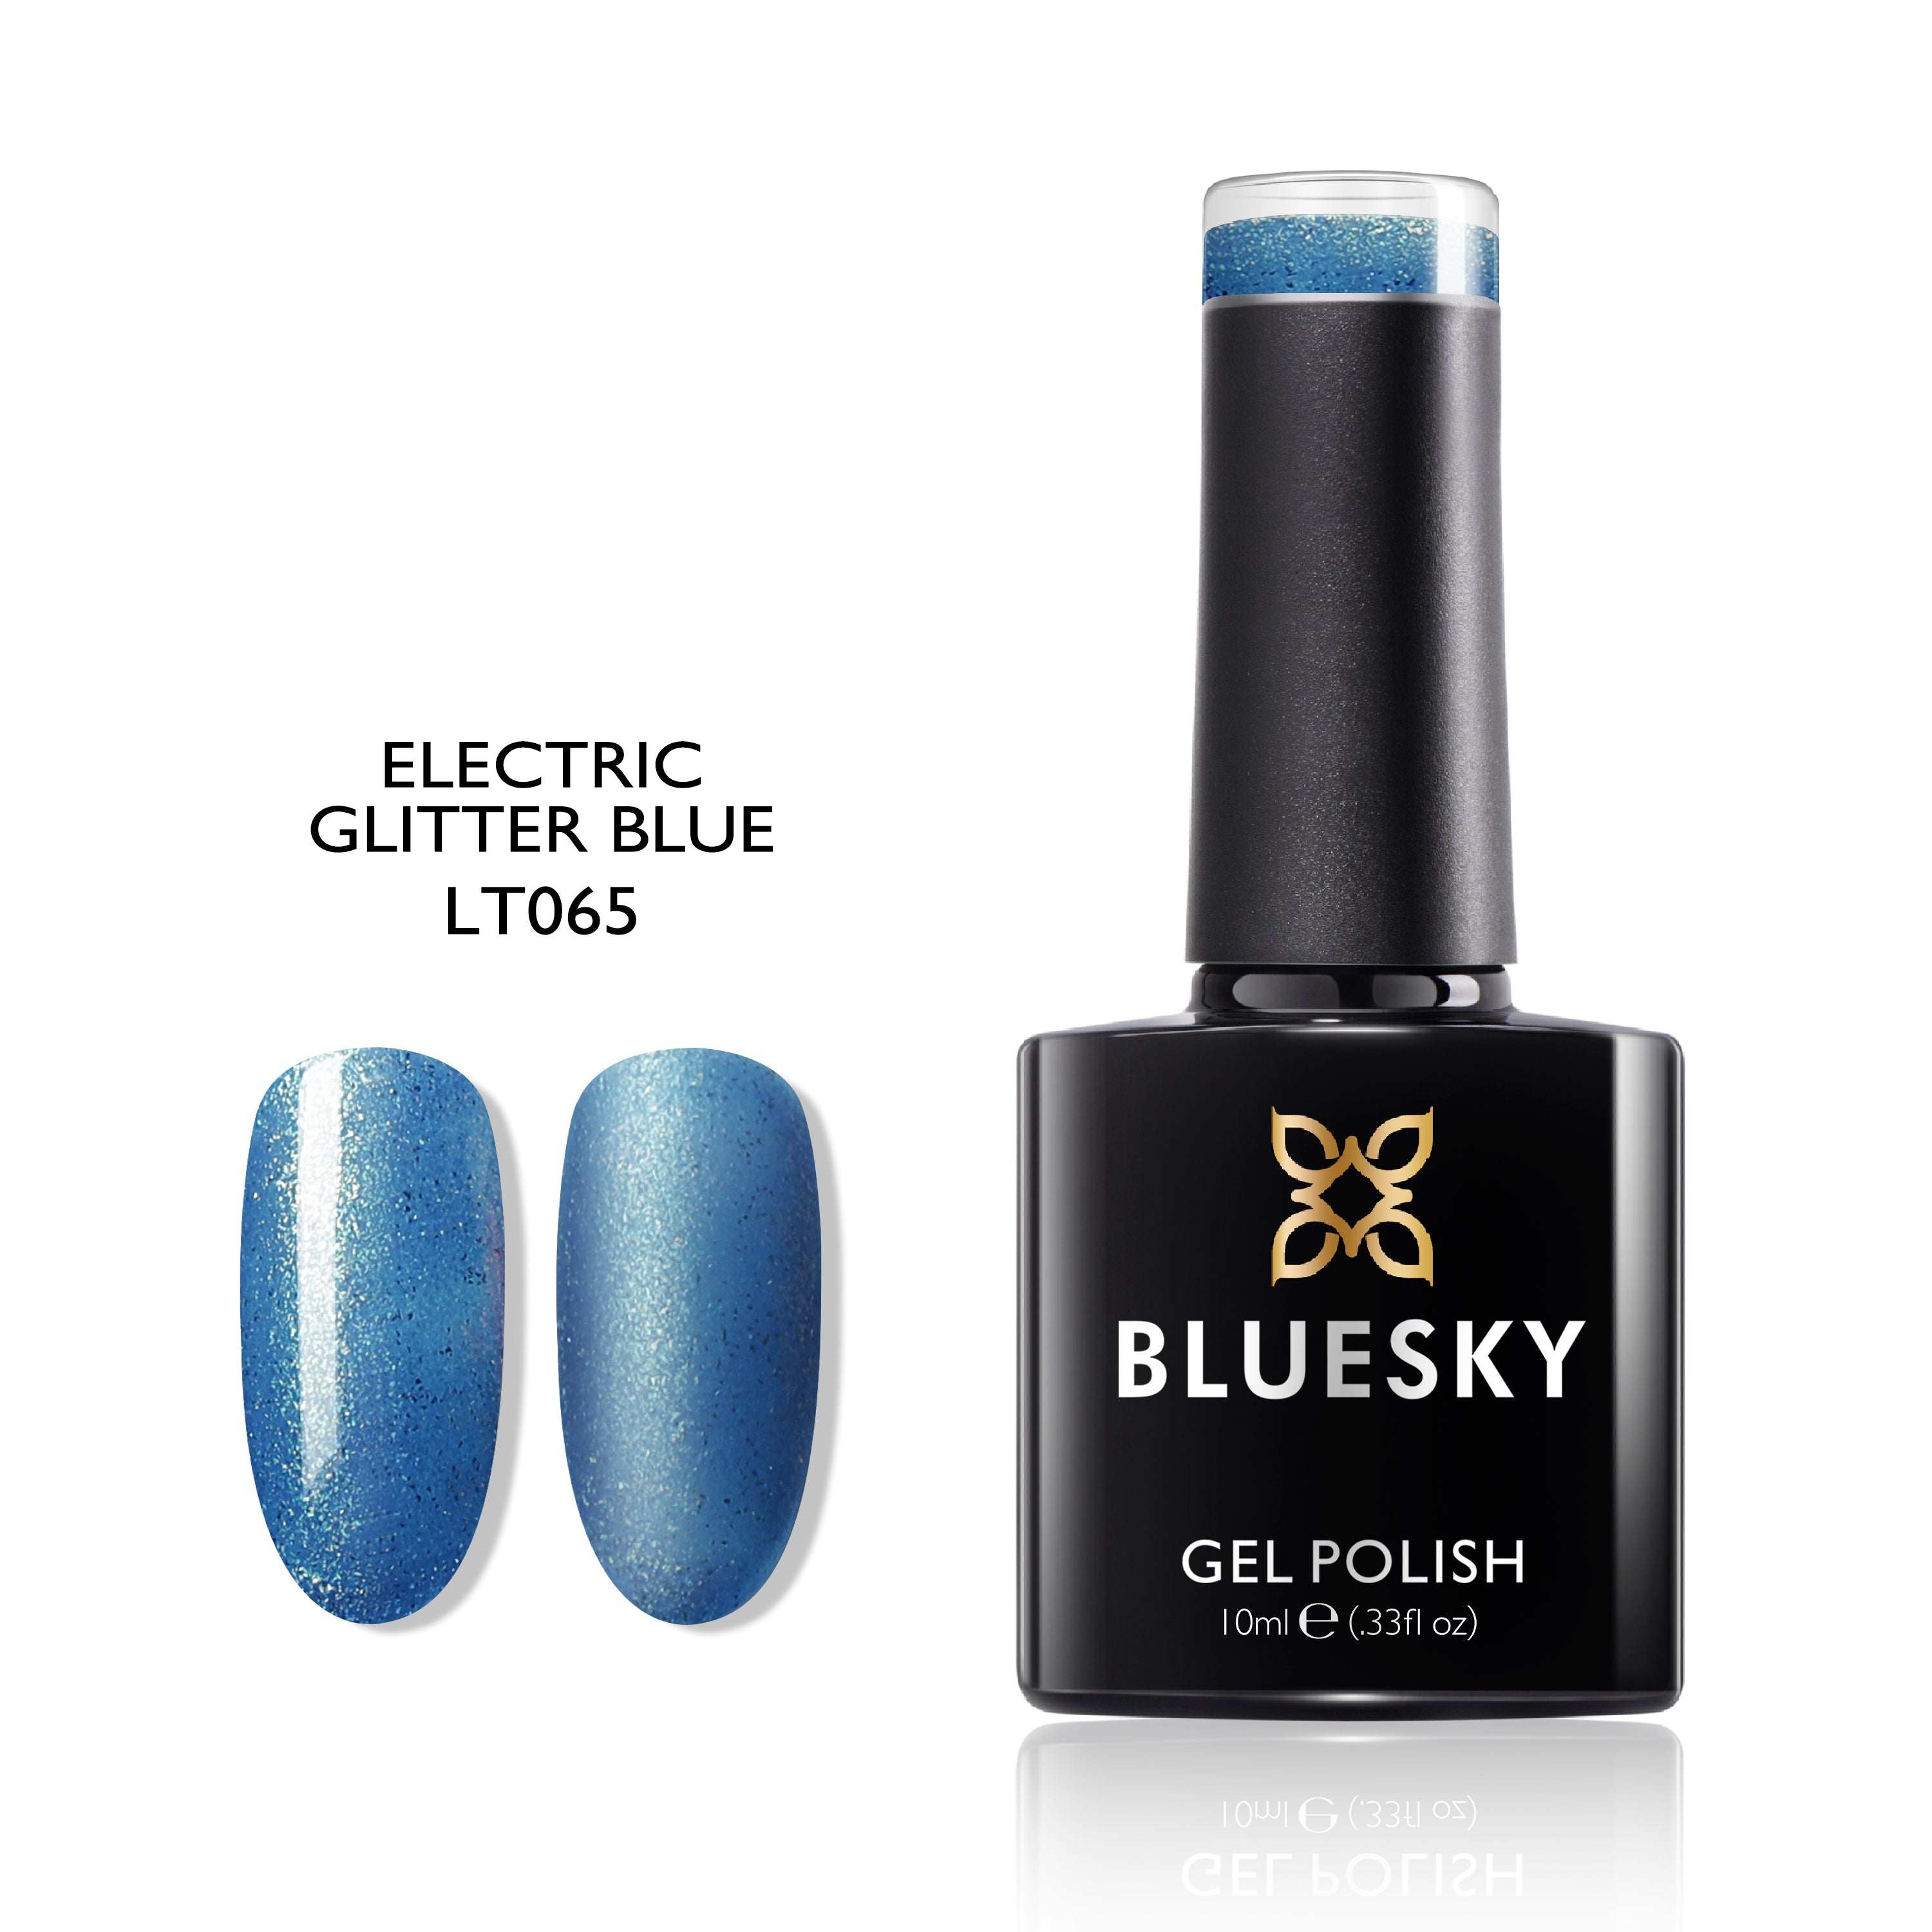 Electric Glitter Blue | Classy Glitter Crystal Color | 10ml Gel Polish - BLUESKY